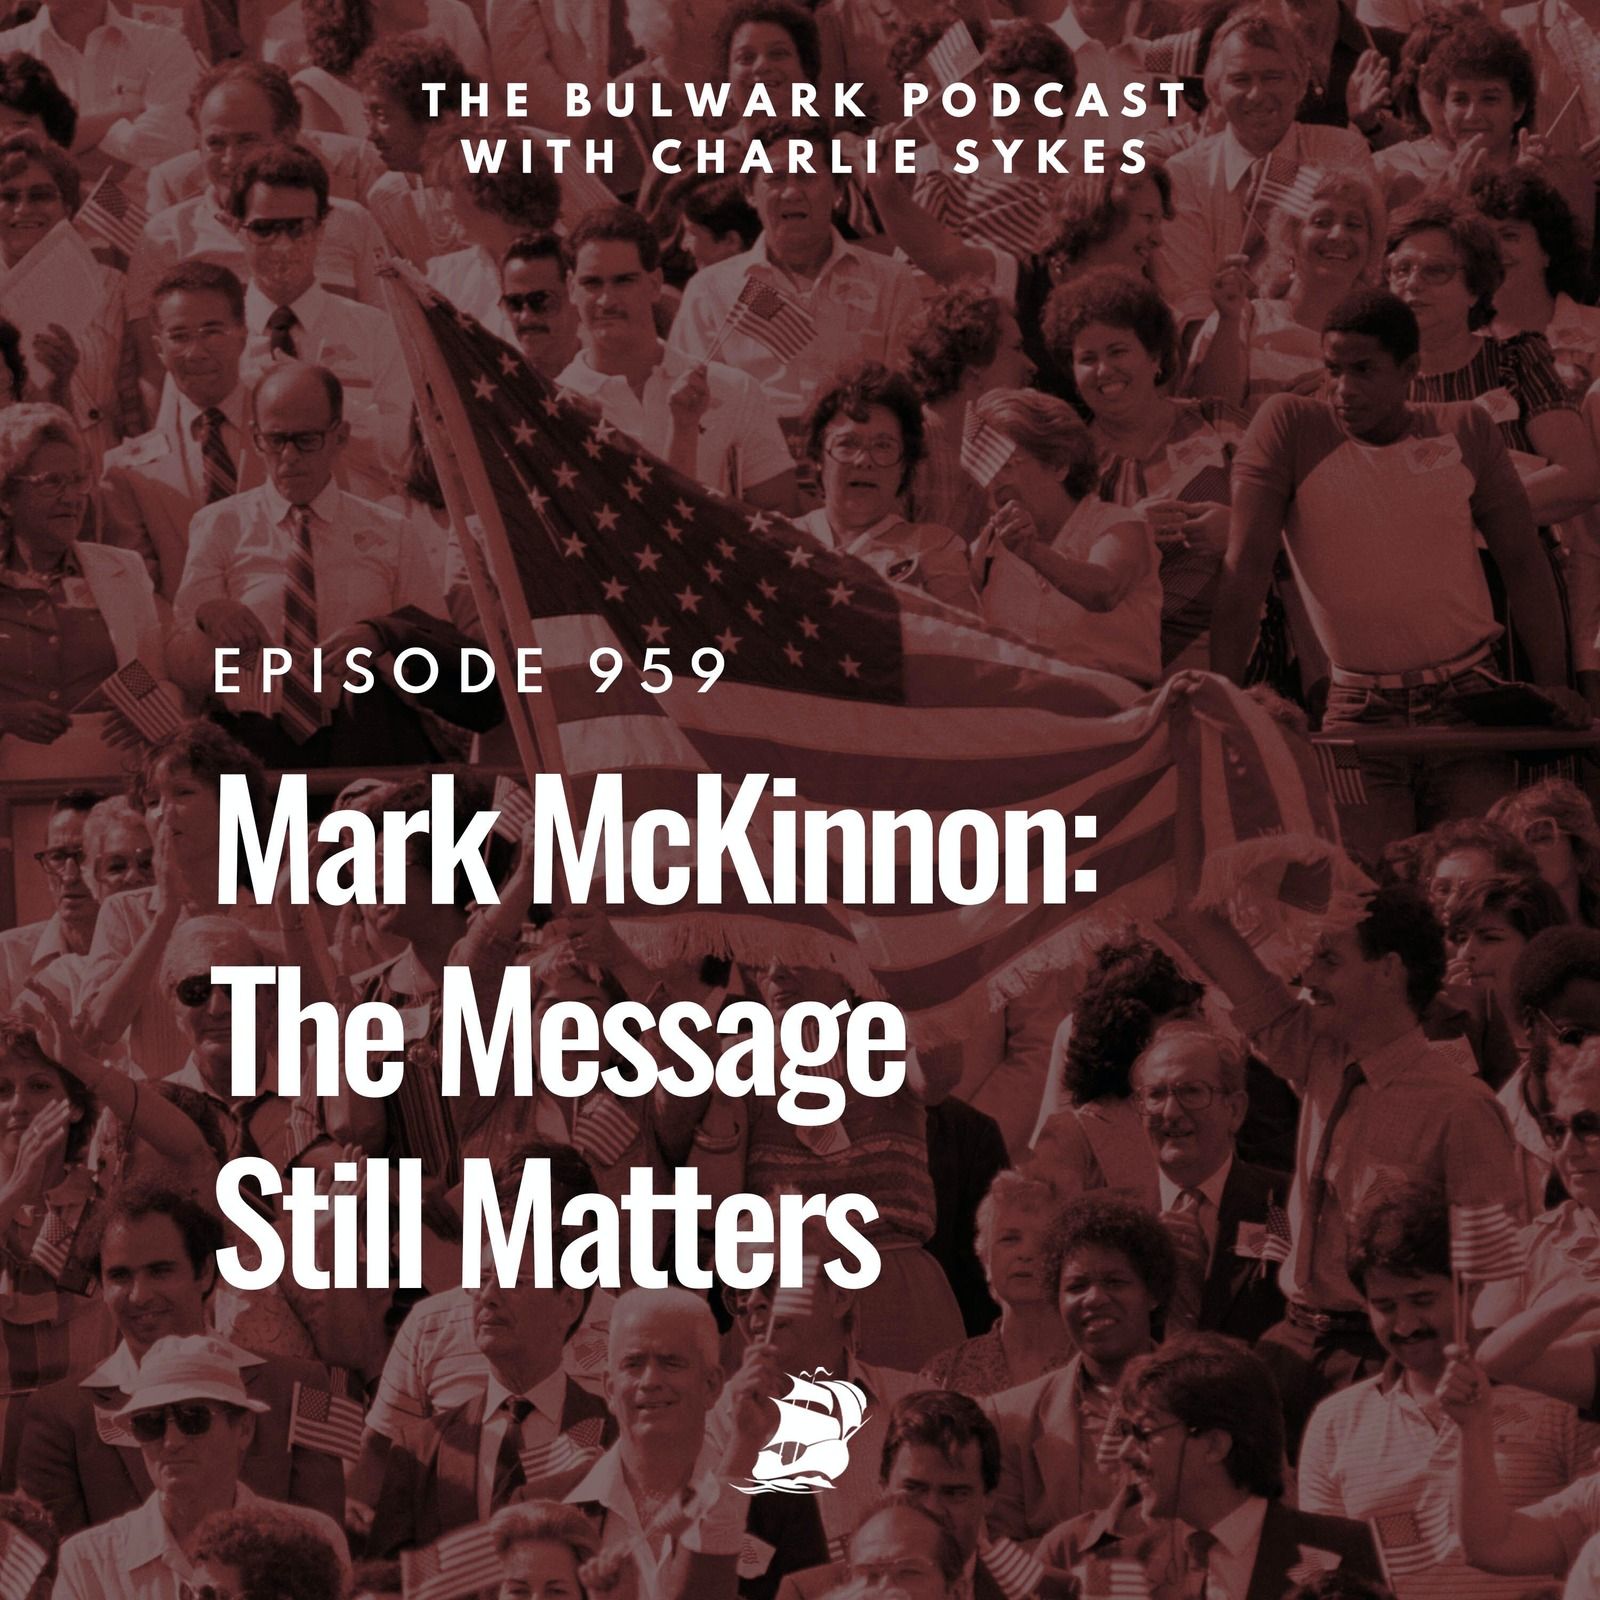 Mark McKinnon: The Message Still Matters